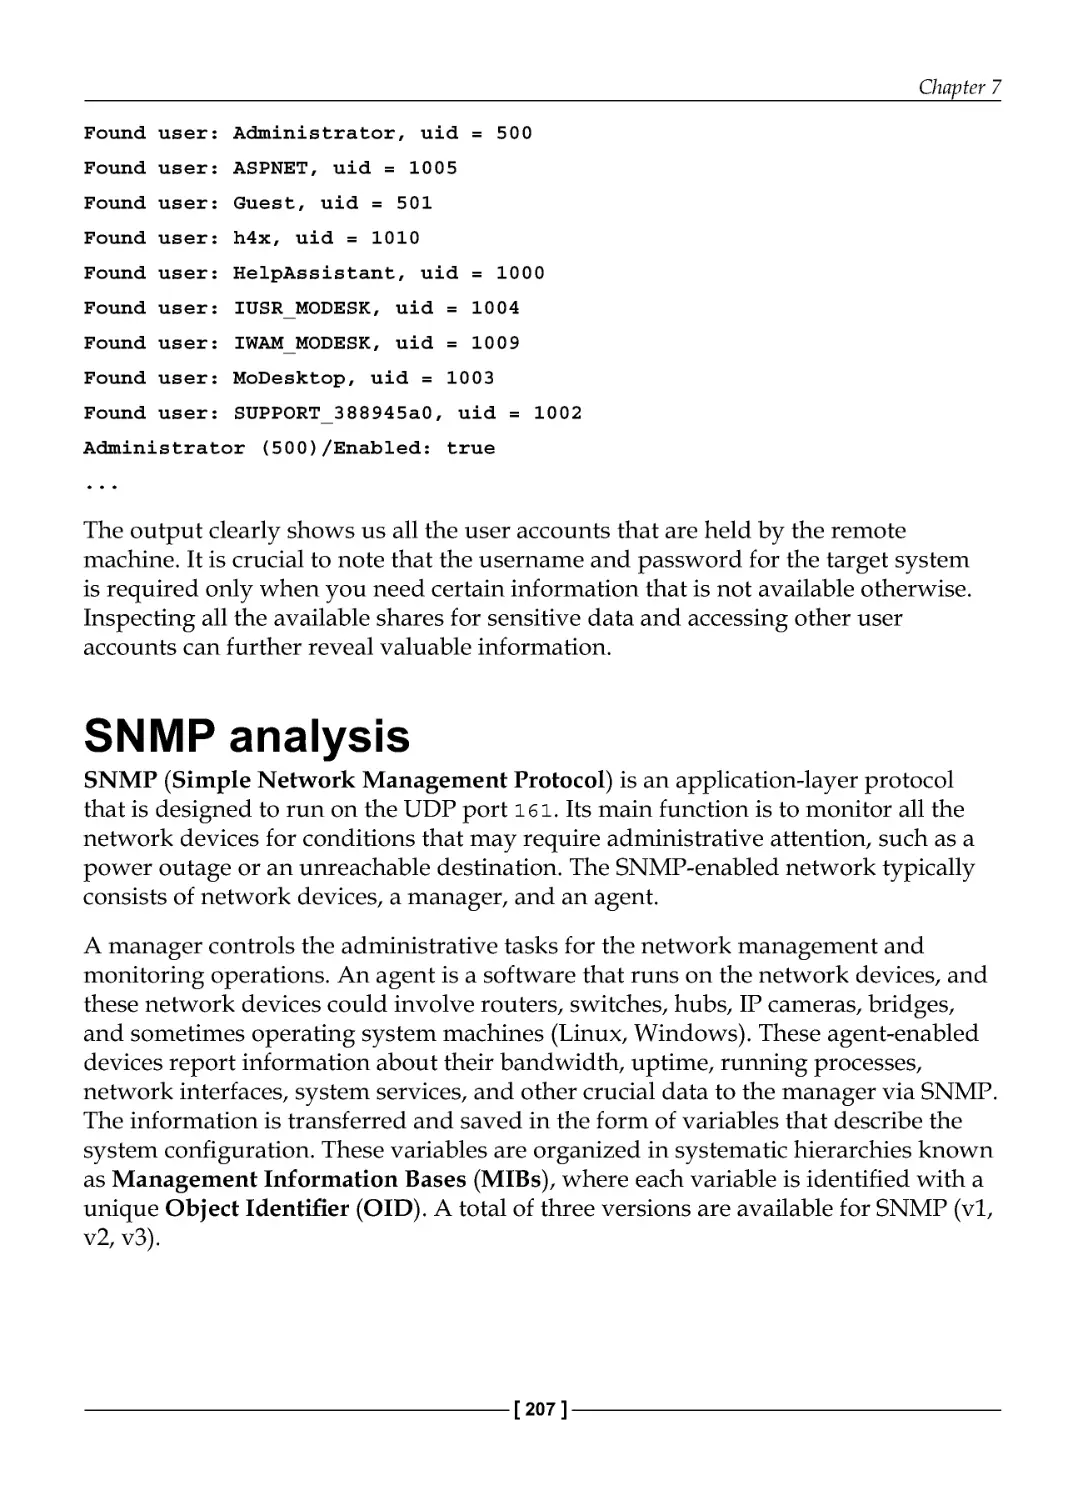 SNMP analysis